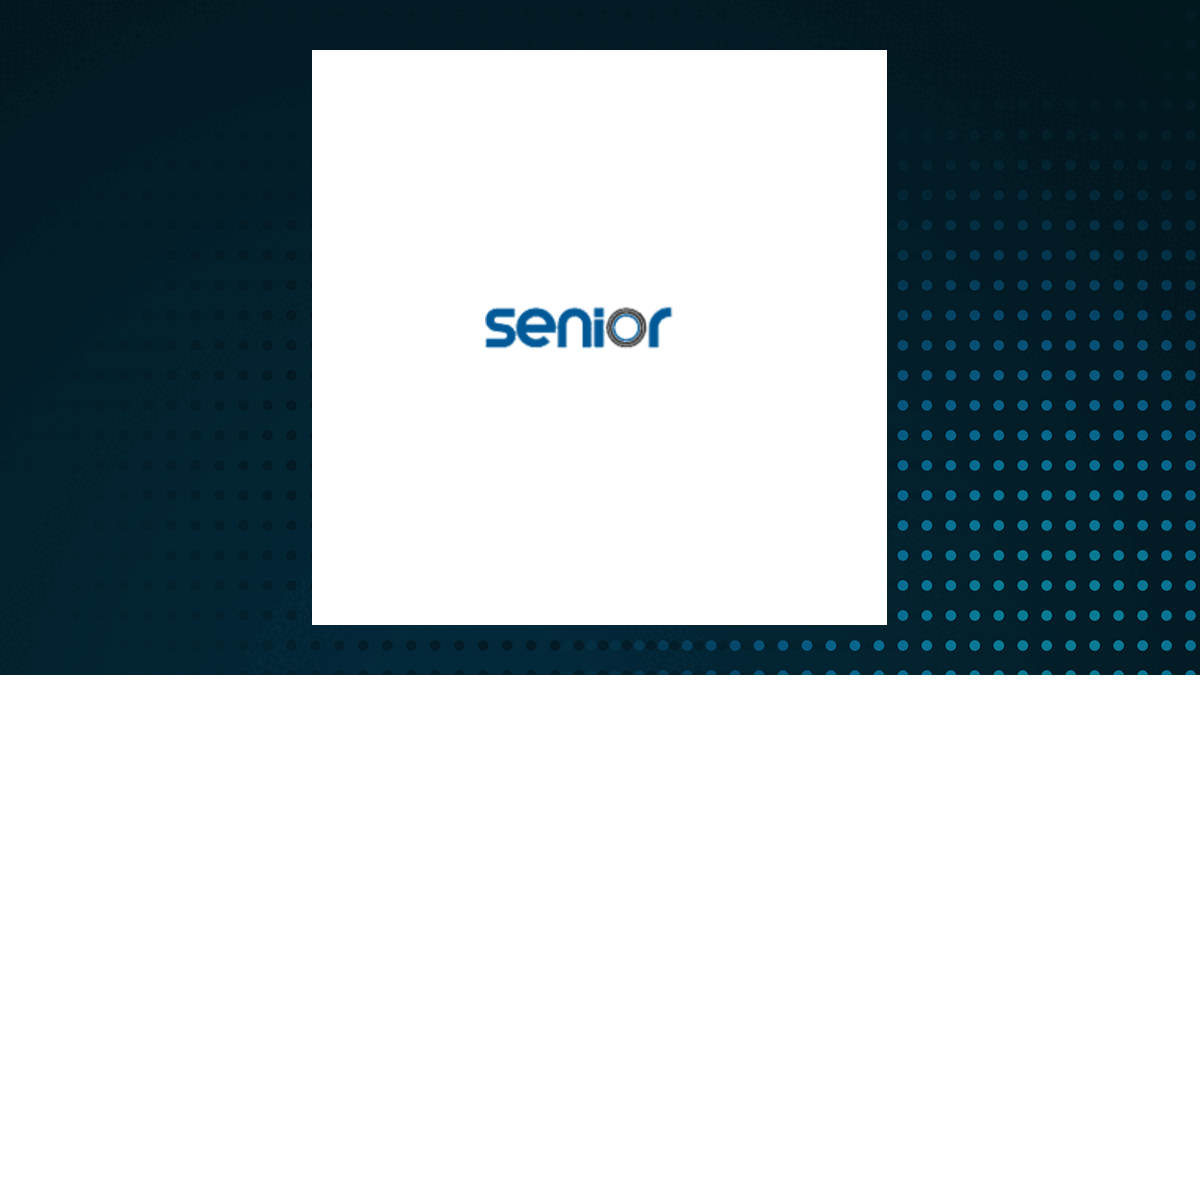 Senior logo